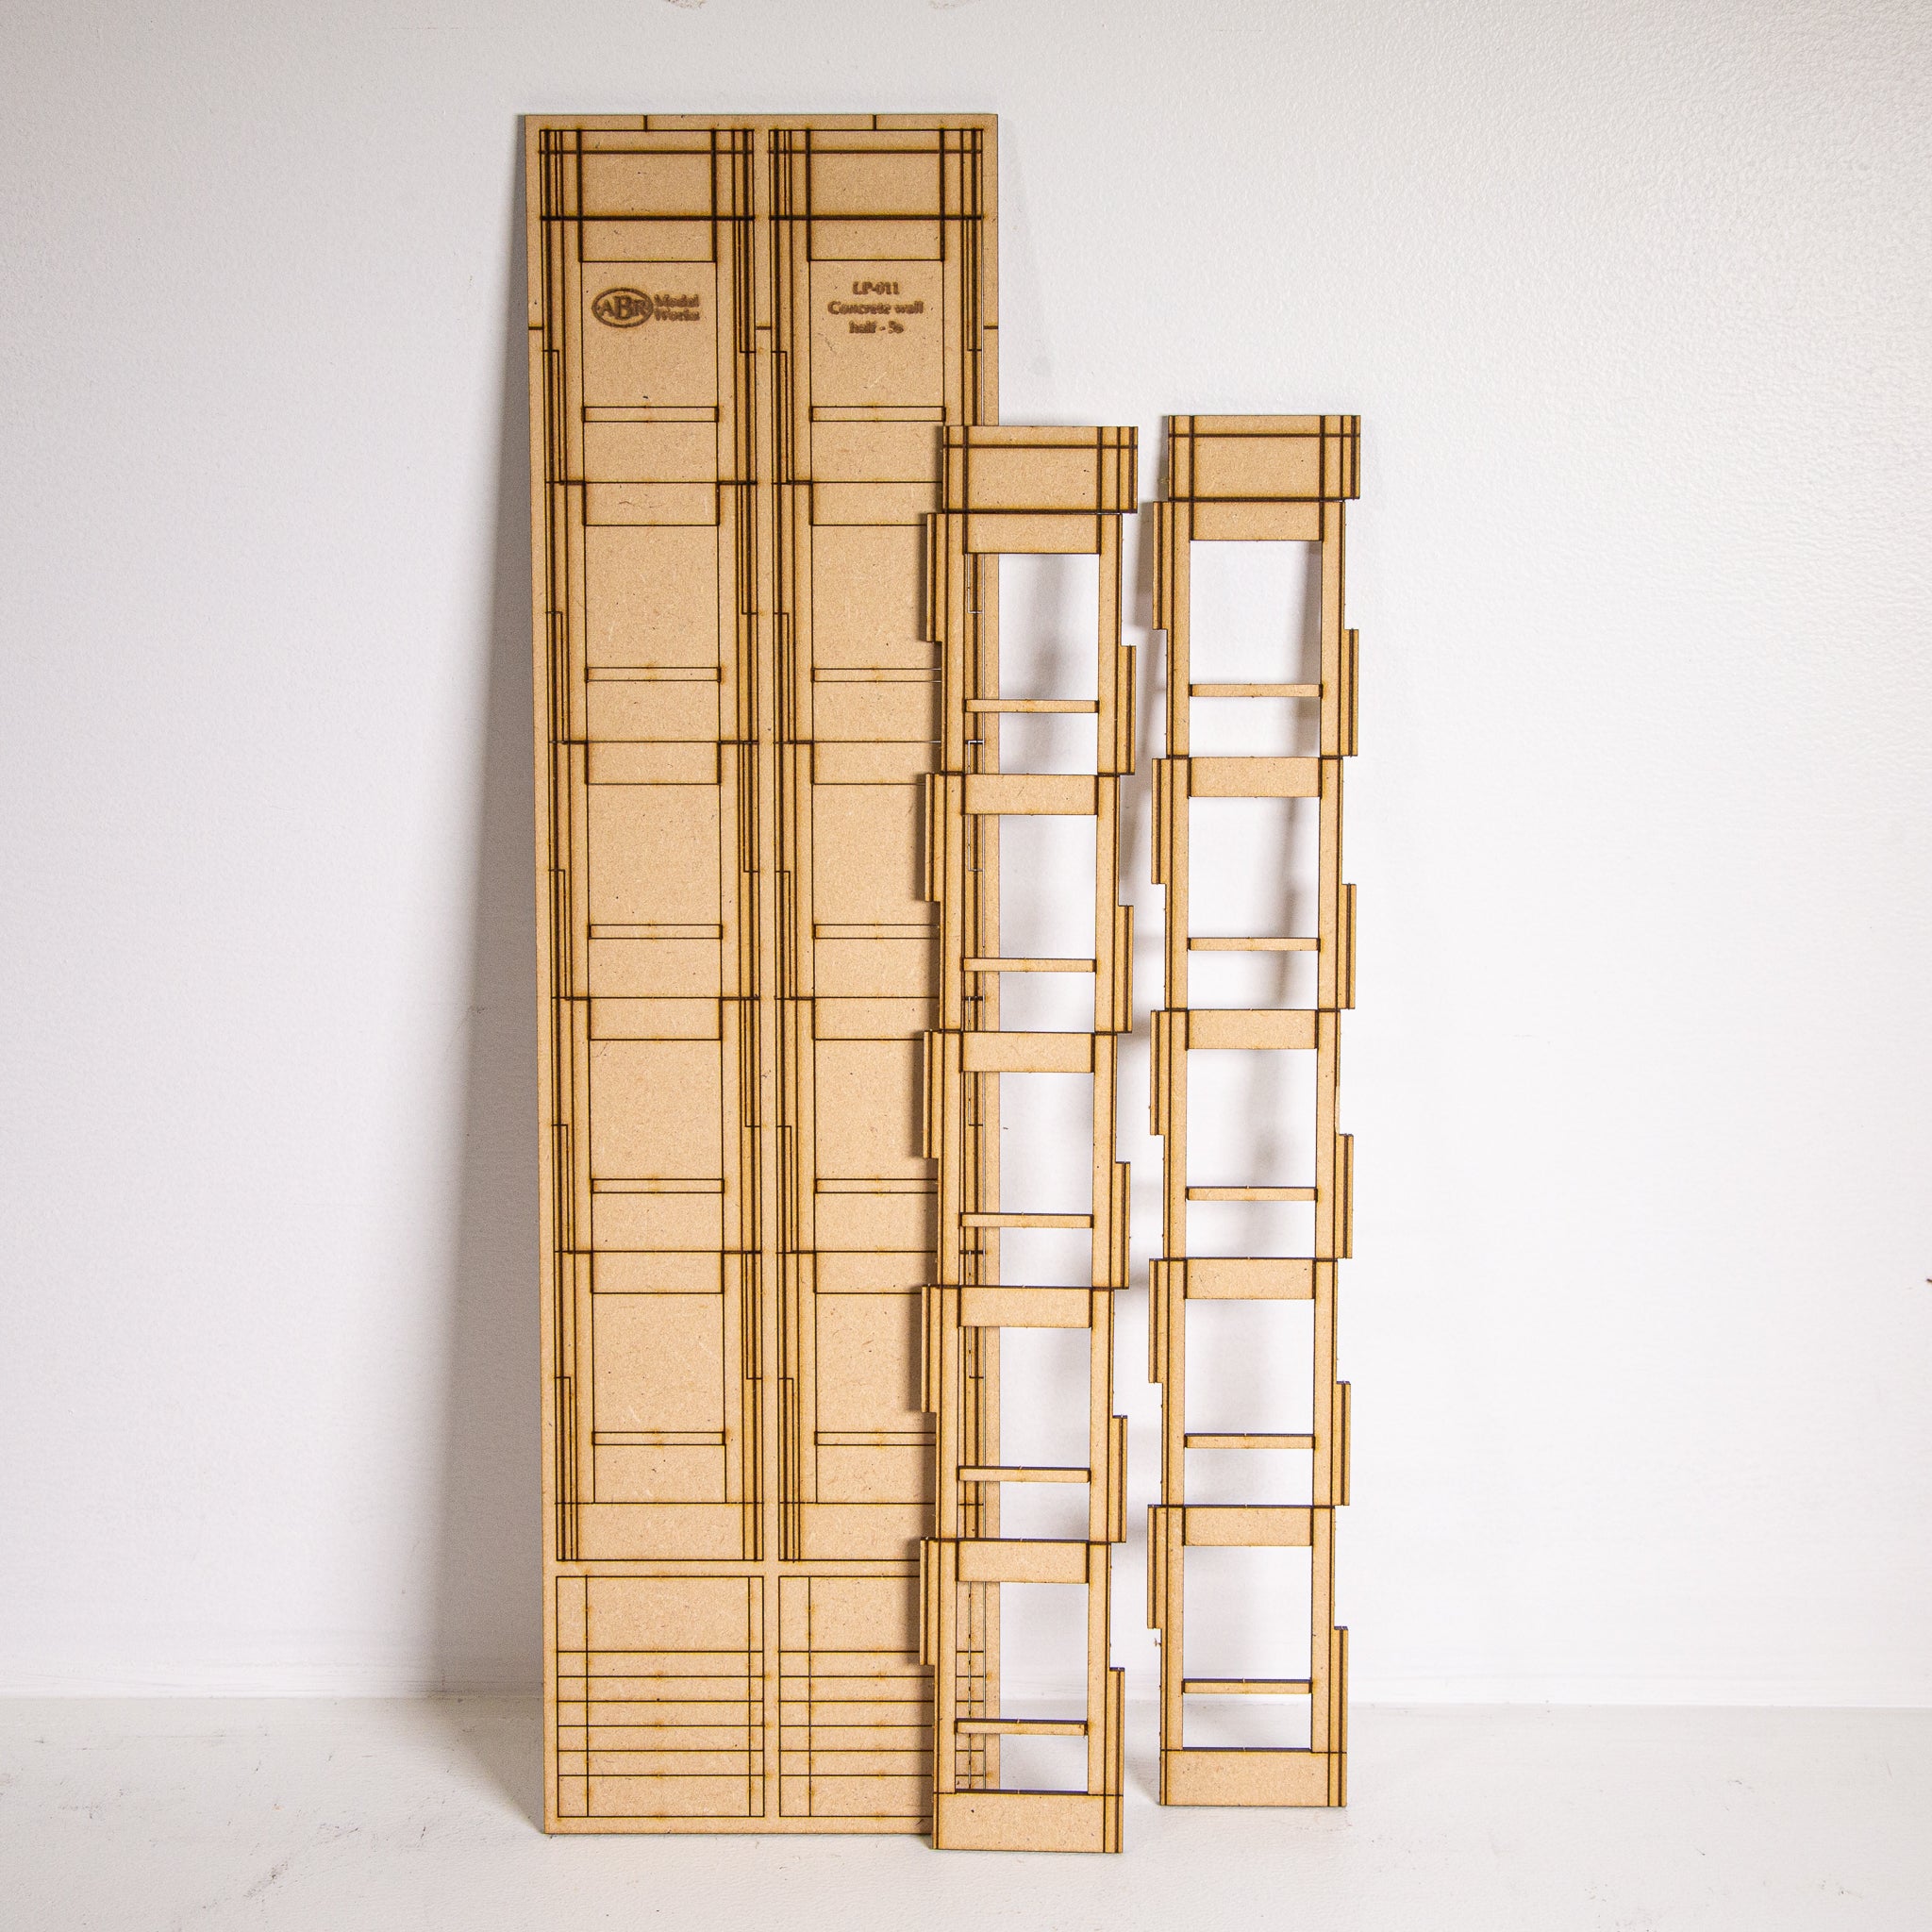 LP011 - HO Scale - Concrete modular model wall half-width panel 2 openings per storey, 5 storey